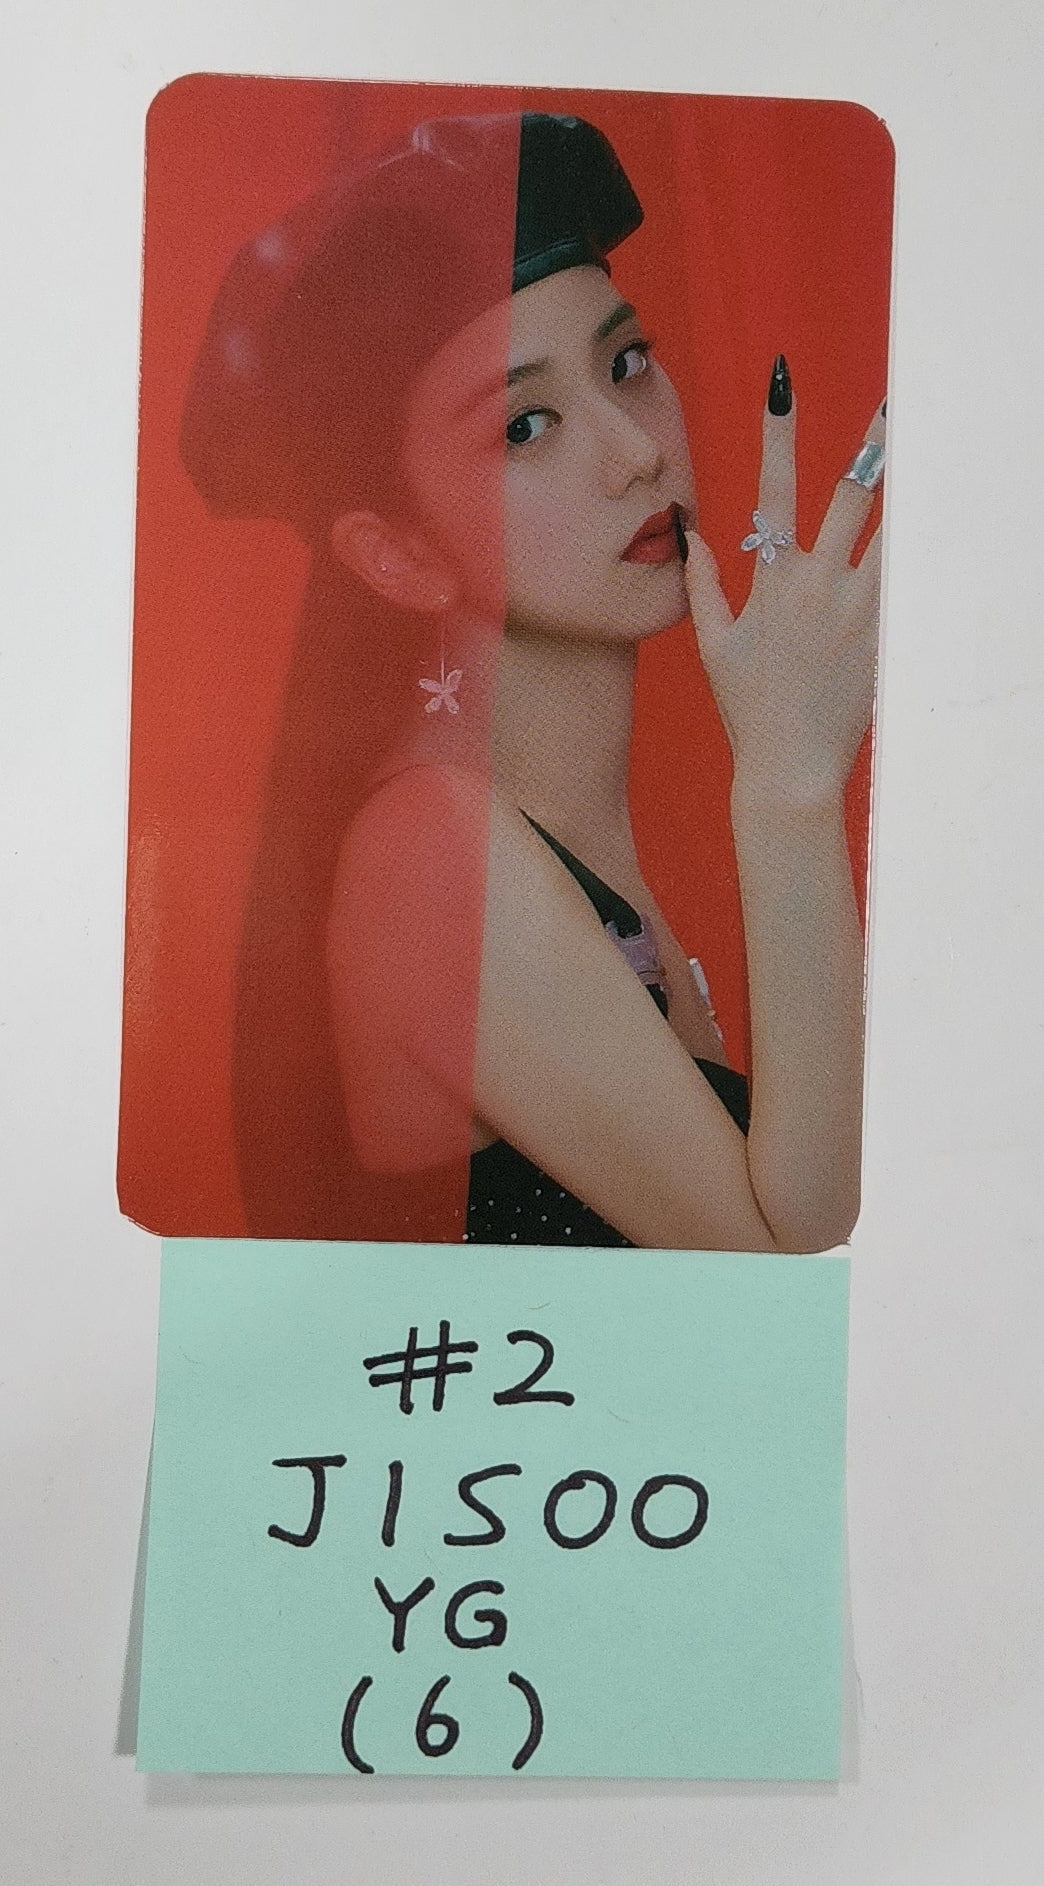 JISOO (Of Black Pink) "ME" 1st Single Album - YG Select Pre-Order Benefit Photocard [Restocked 5/15]